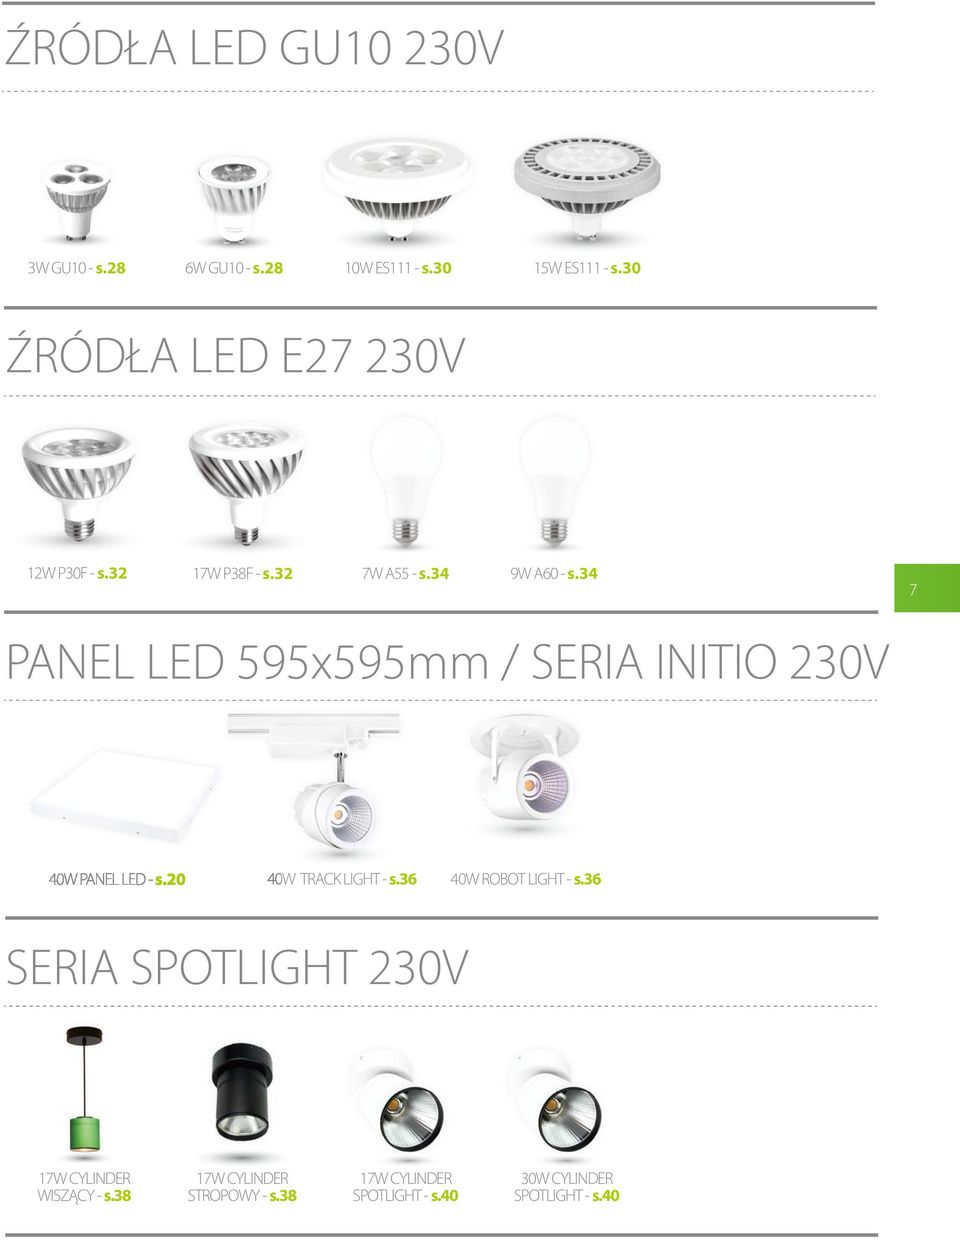 34 7 PNEL LED 595x595mm / SERI INITIO 2V 40W PNEL LED - s.20 40W TRCK LIGHT - s.